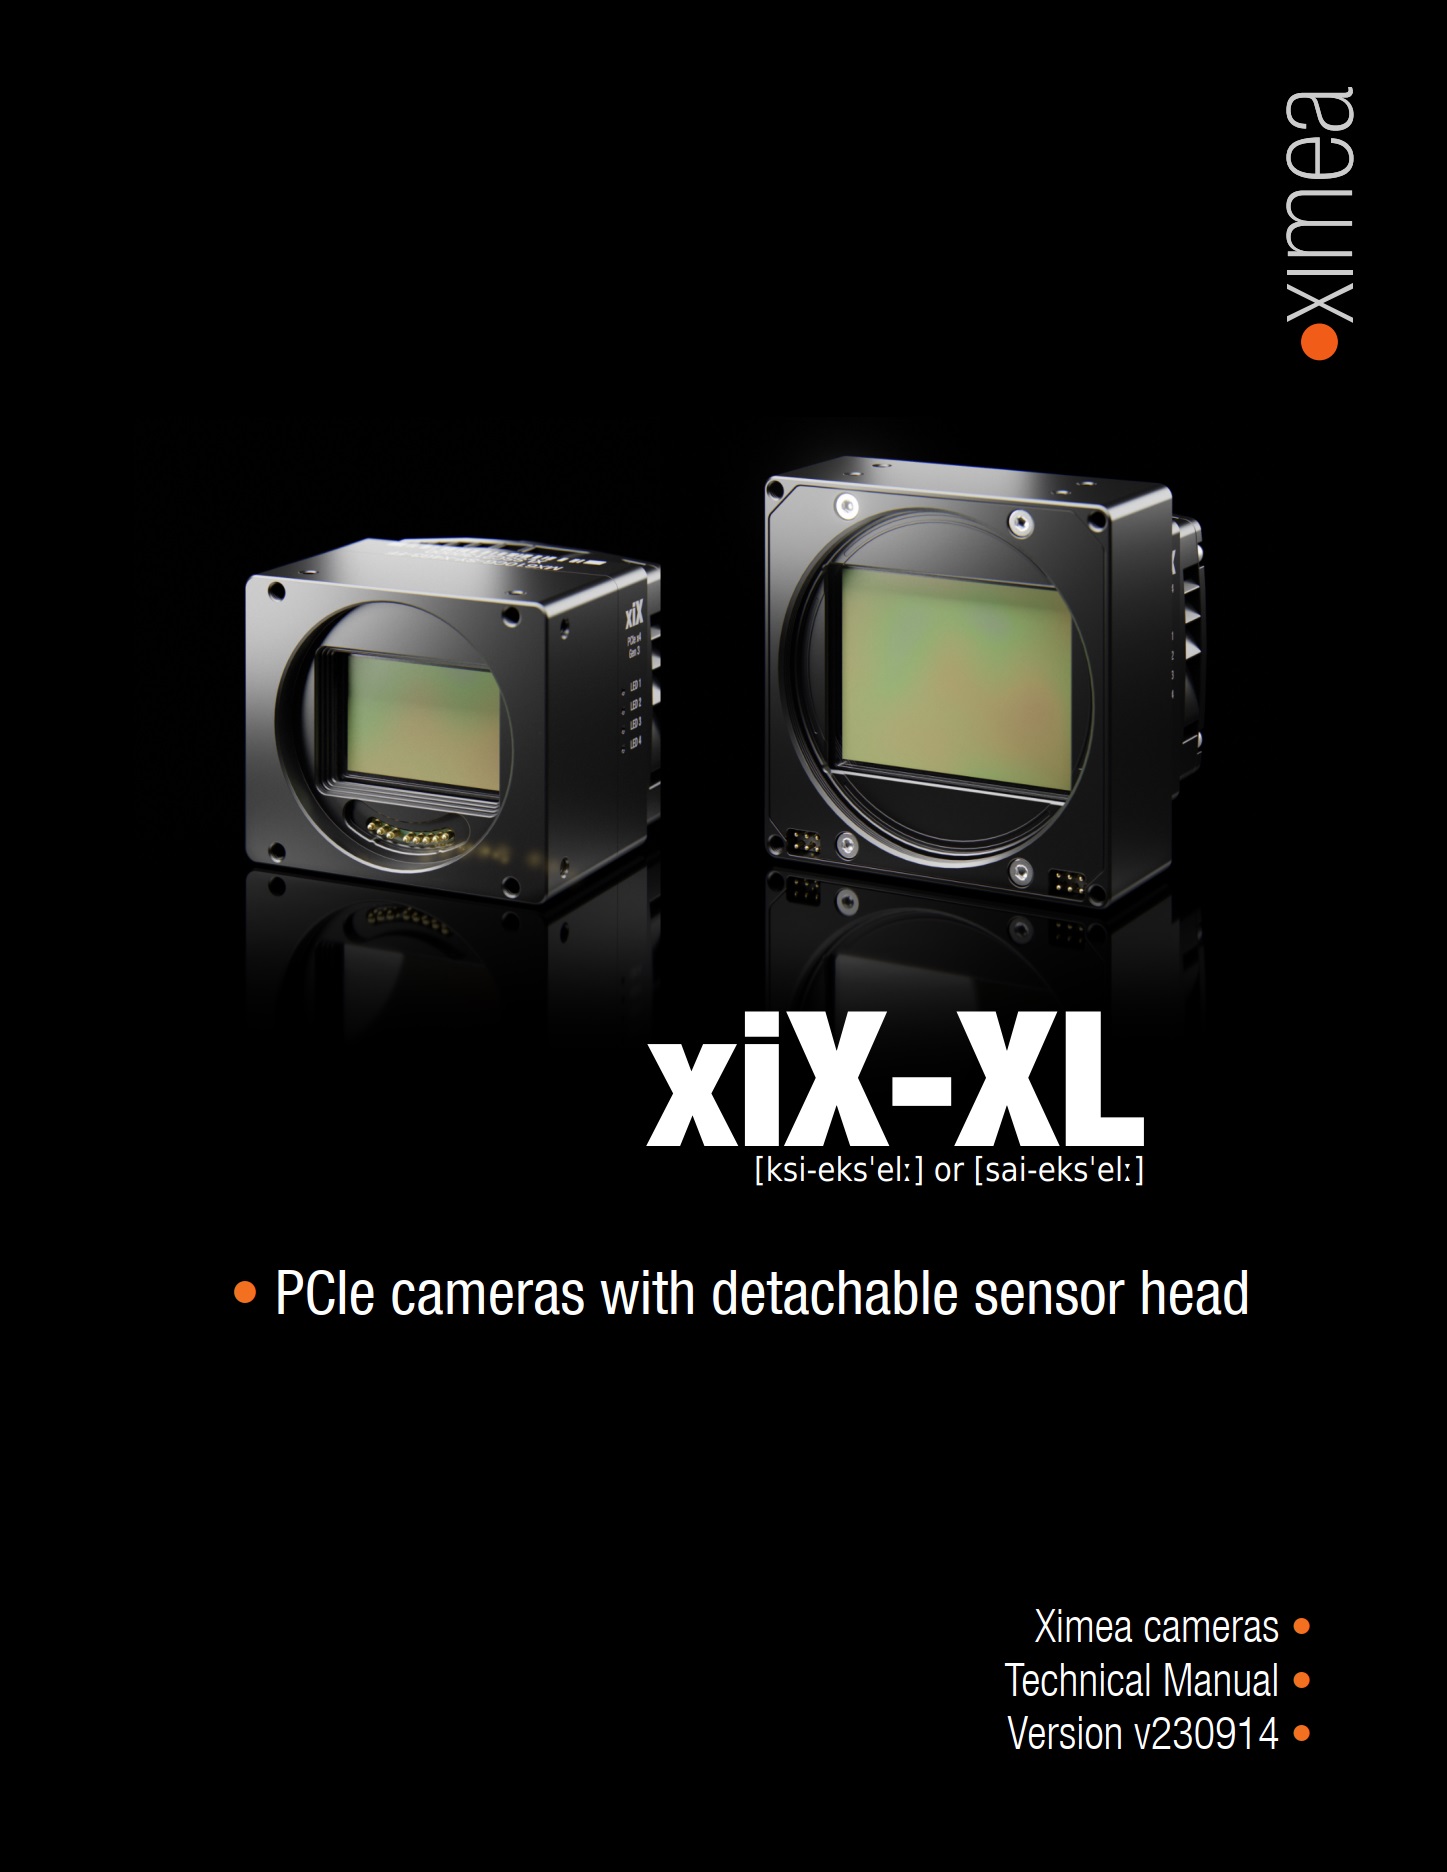 xix-xl high resolution medium format BSI cameras manual